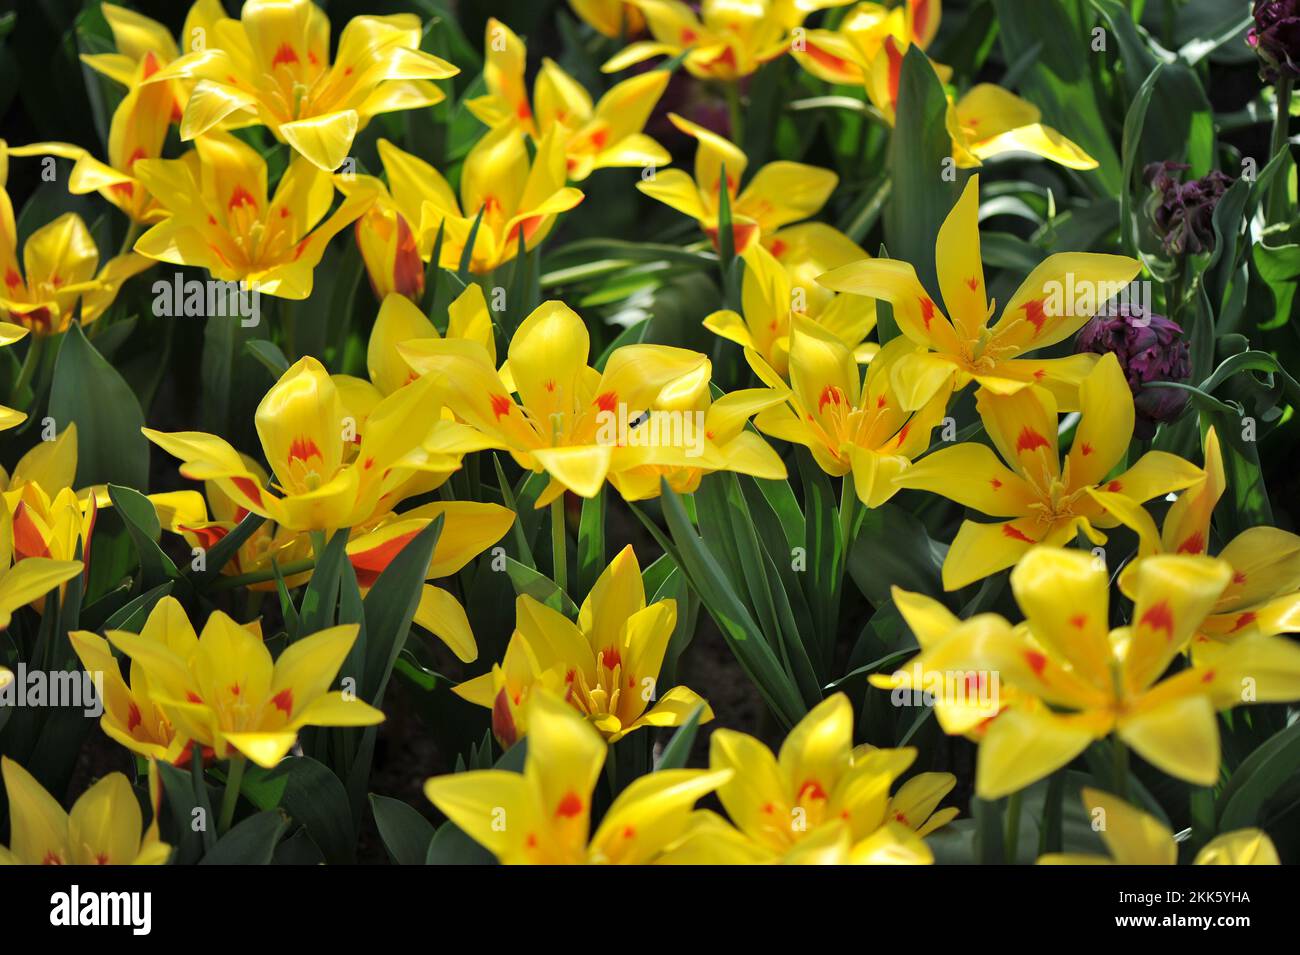 Yellow and red Miscellaneous Tschimgan mountain tulips (Tulipa tschimganica) bloom in a garden in March Stock Photo